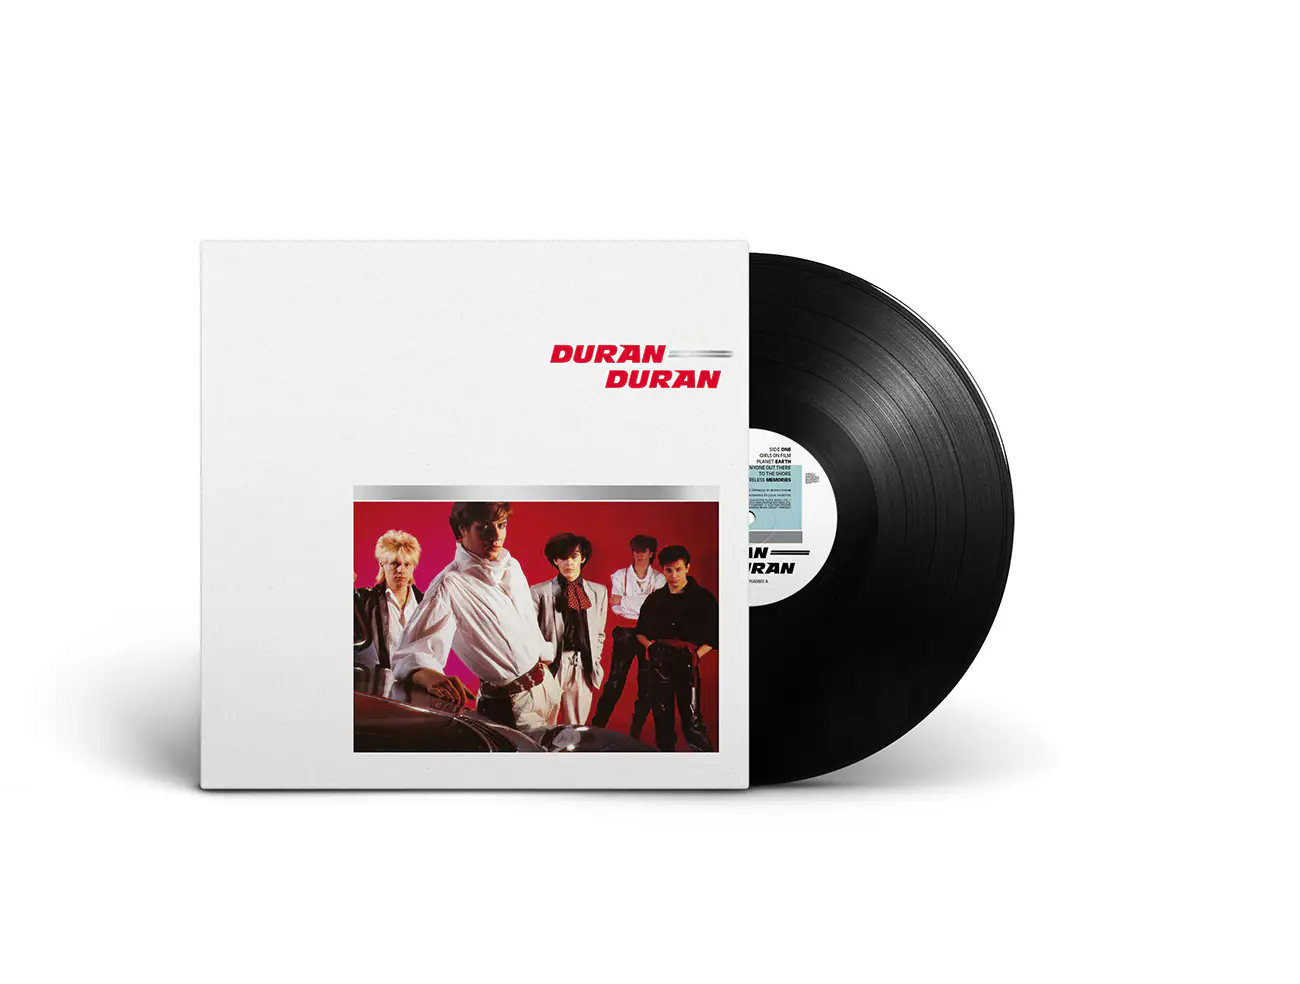 Duran Duran announce landmark reissue of first 5 studio albums on LP & CD